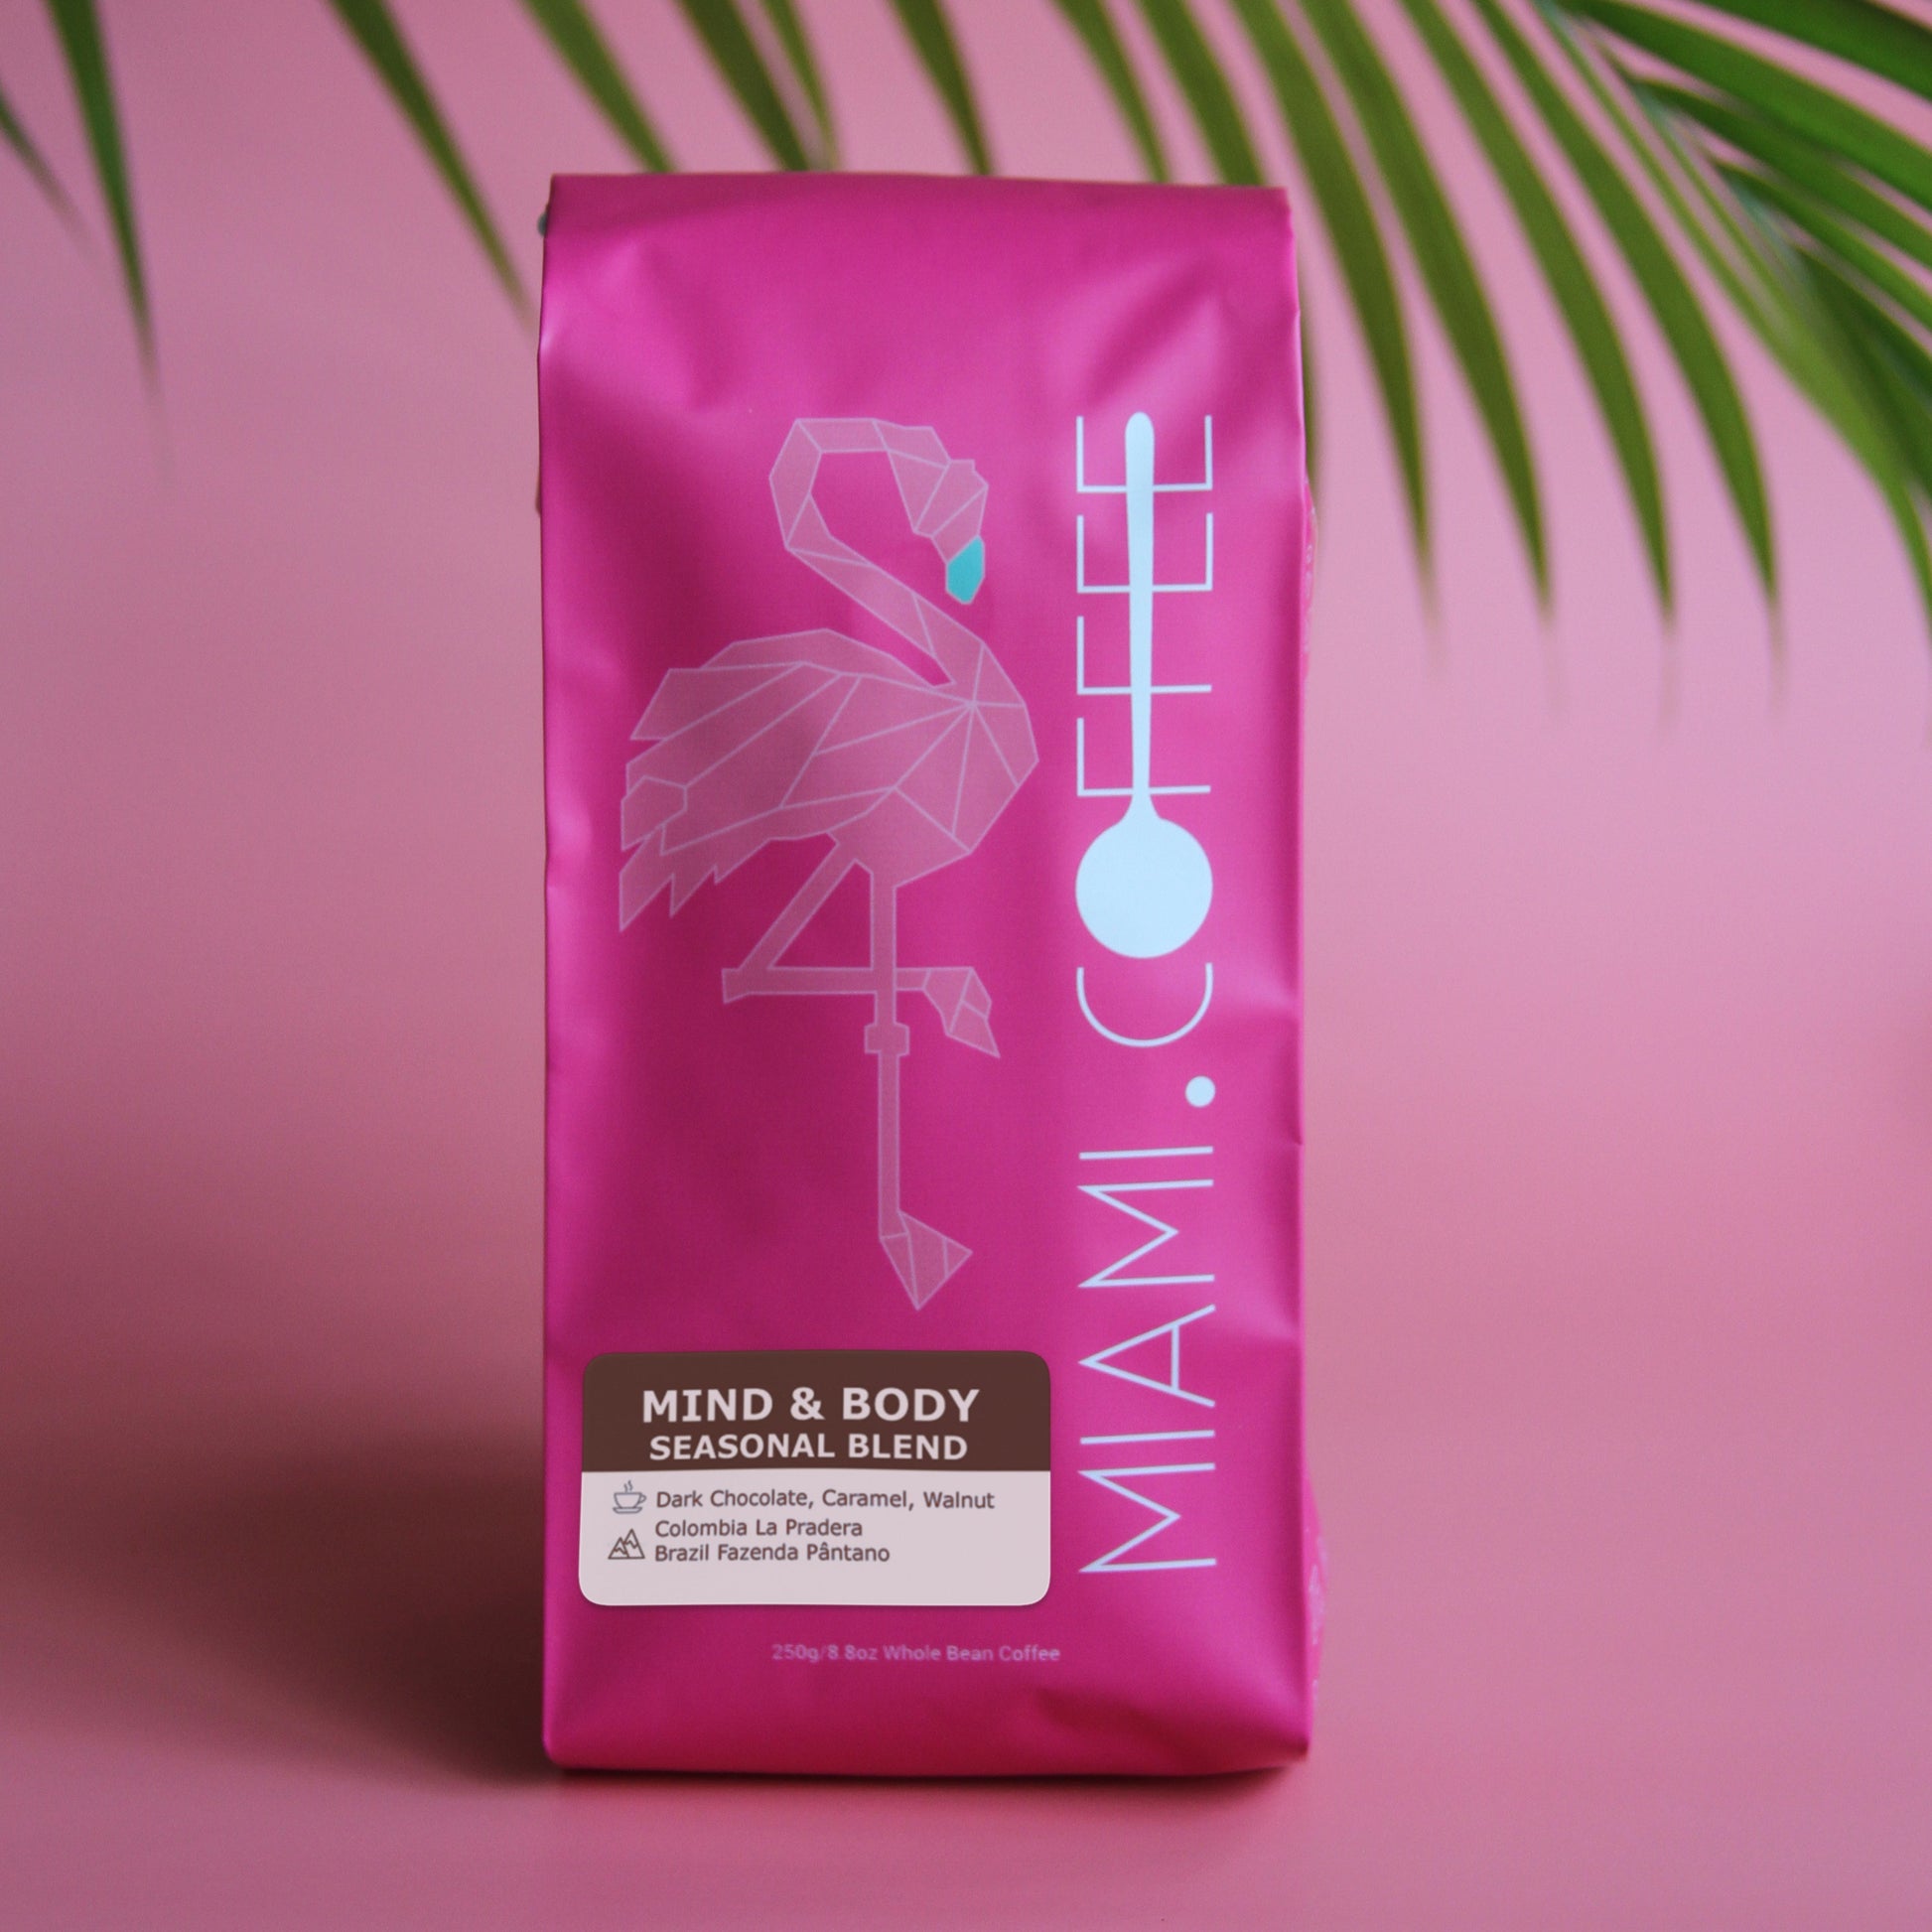 Mind & Body Blend by Miami dot Coffee 9oz bag. Flavor descriptors: Dark Chocolate, Caramel, Walnut